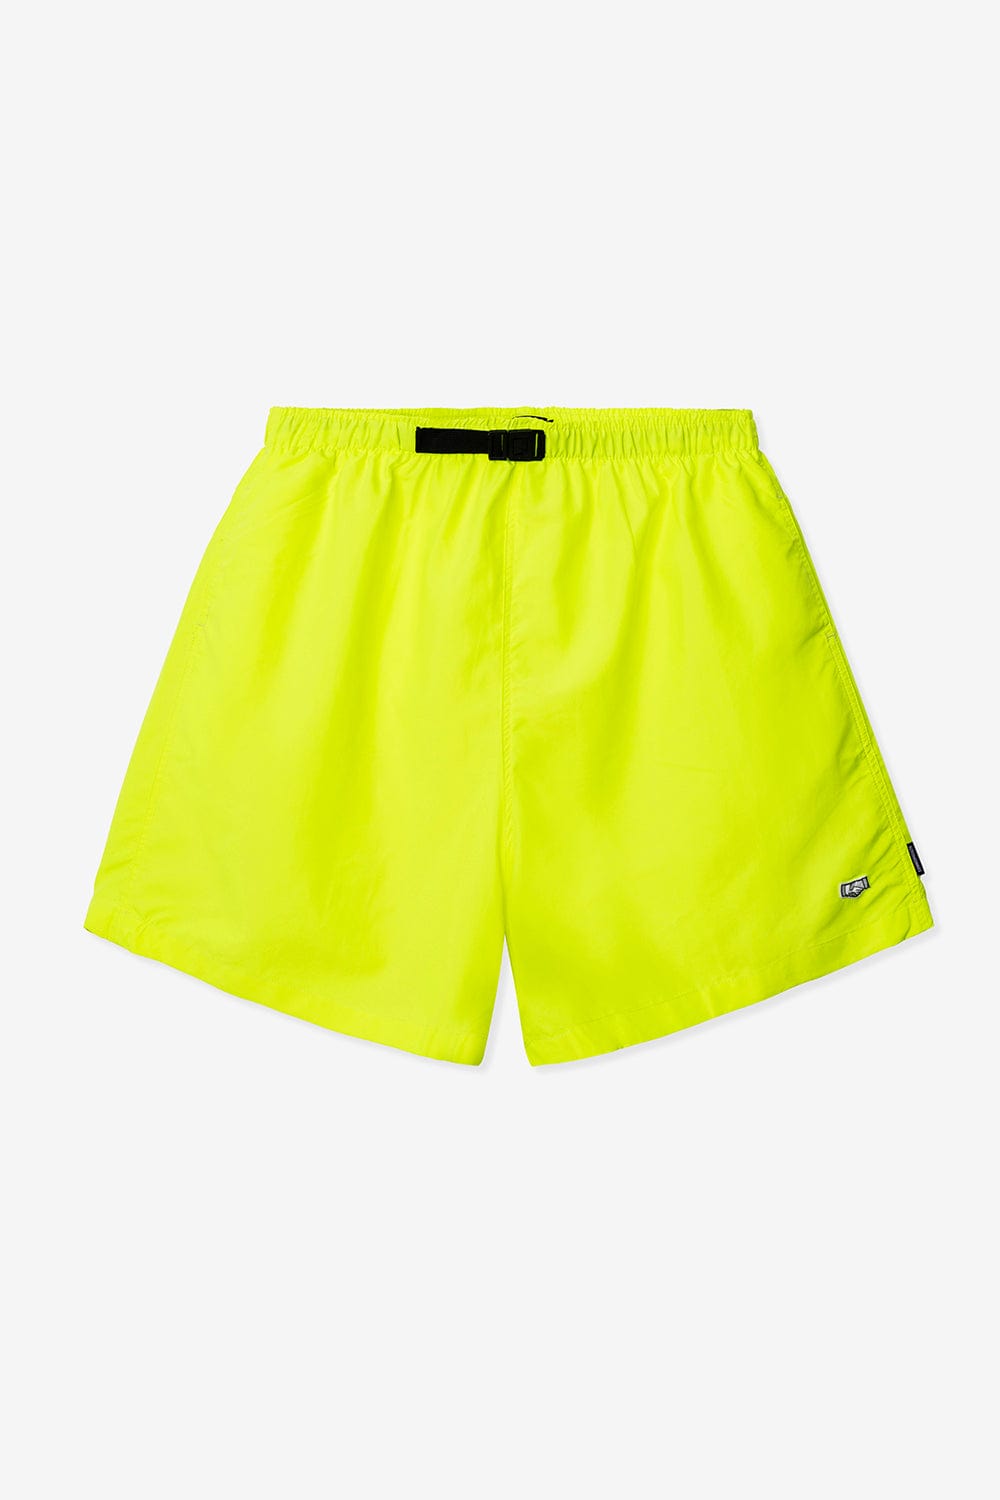 Commonwealth Equipment Shorts (Hi Vis Green)